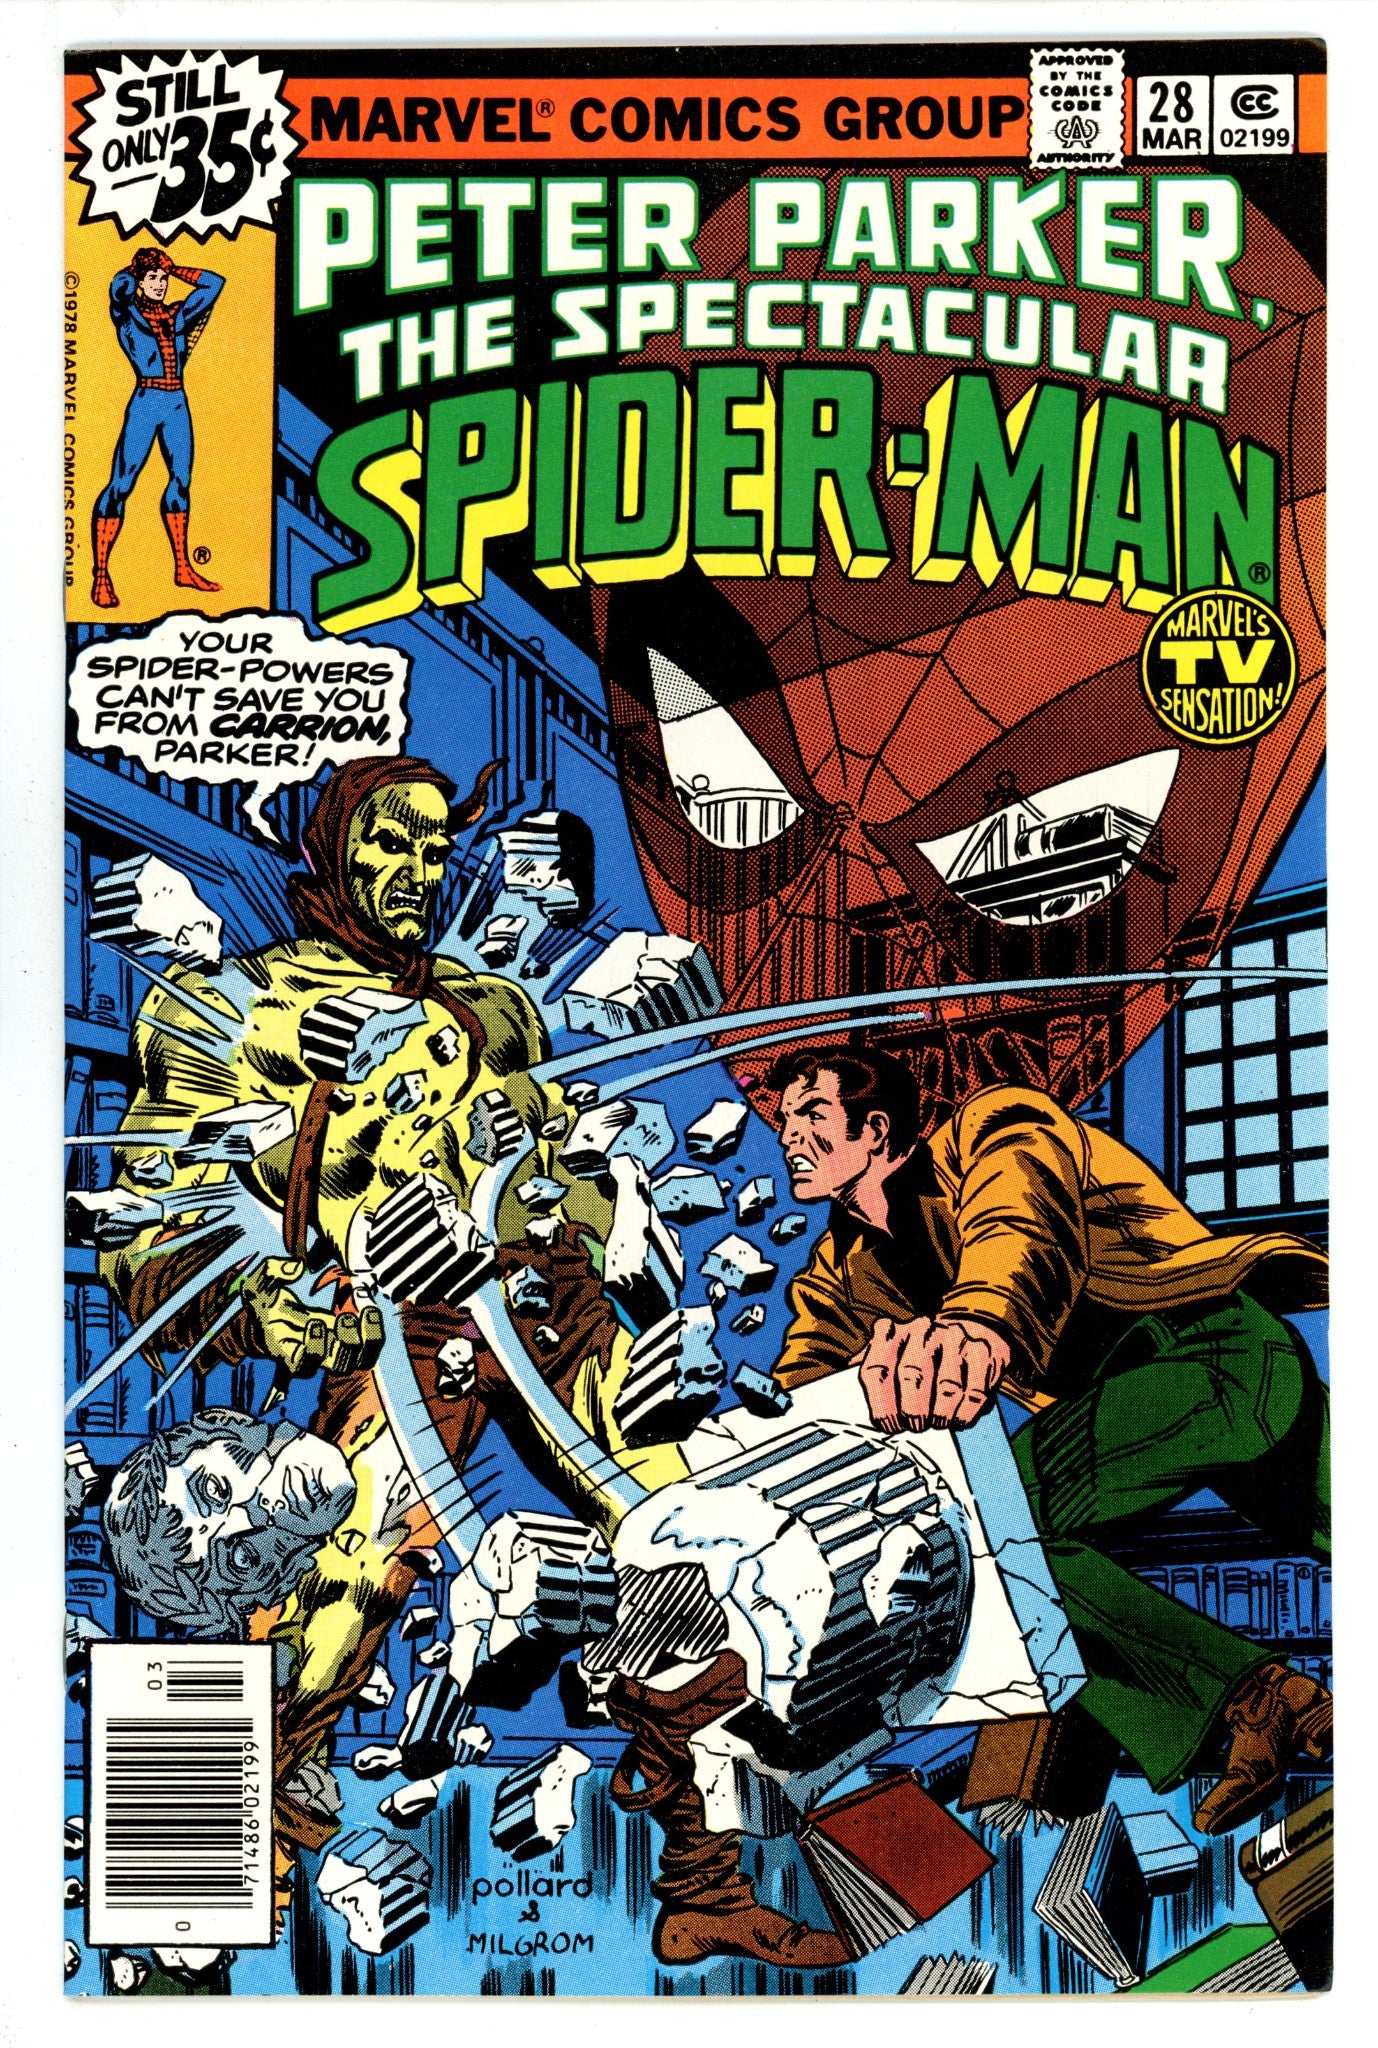 The Spectacular Spider-Man Vol 1 28 VF+ (8.5) (1979) 